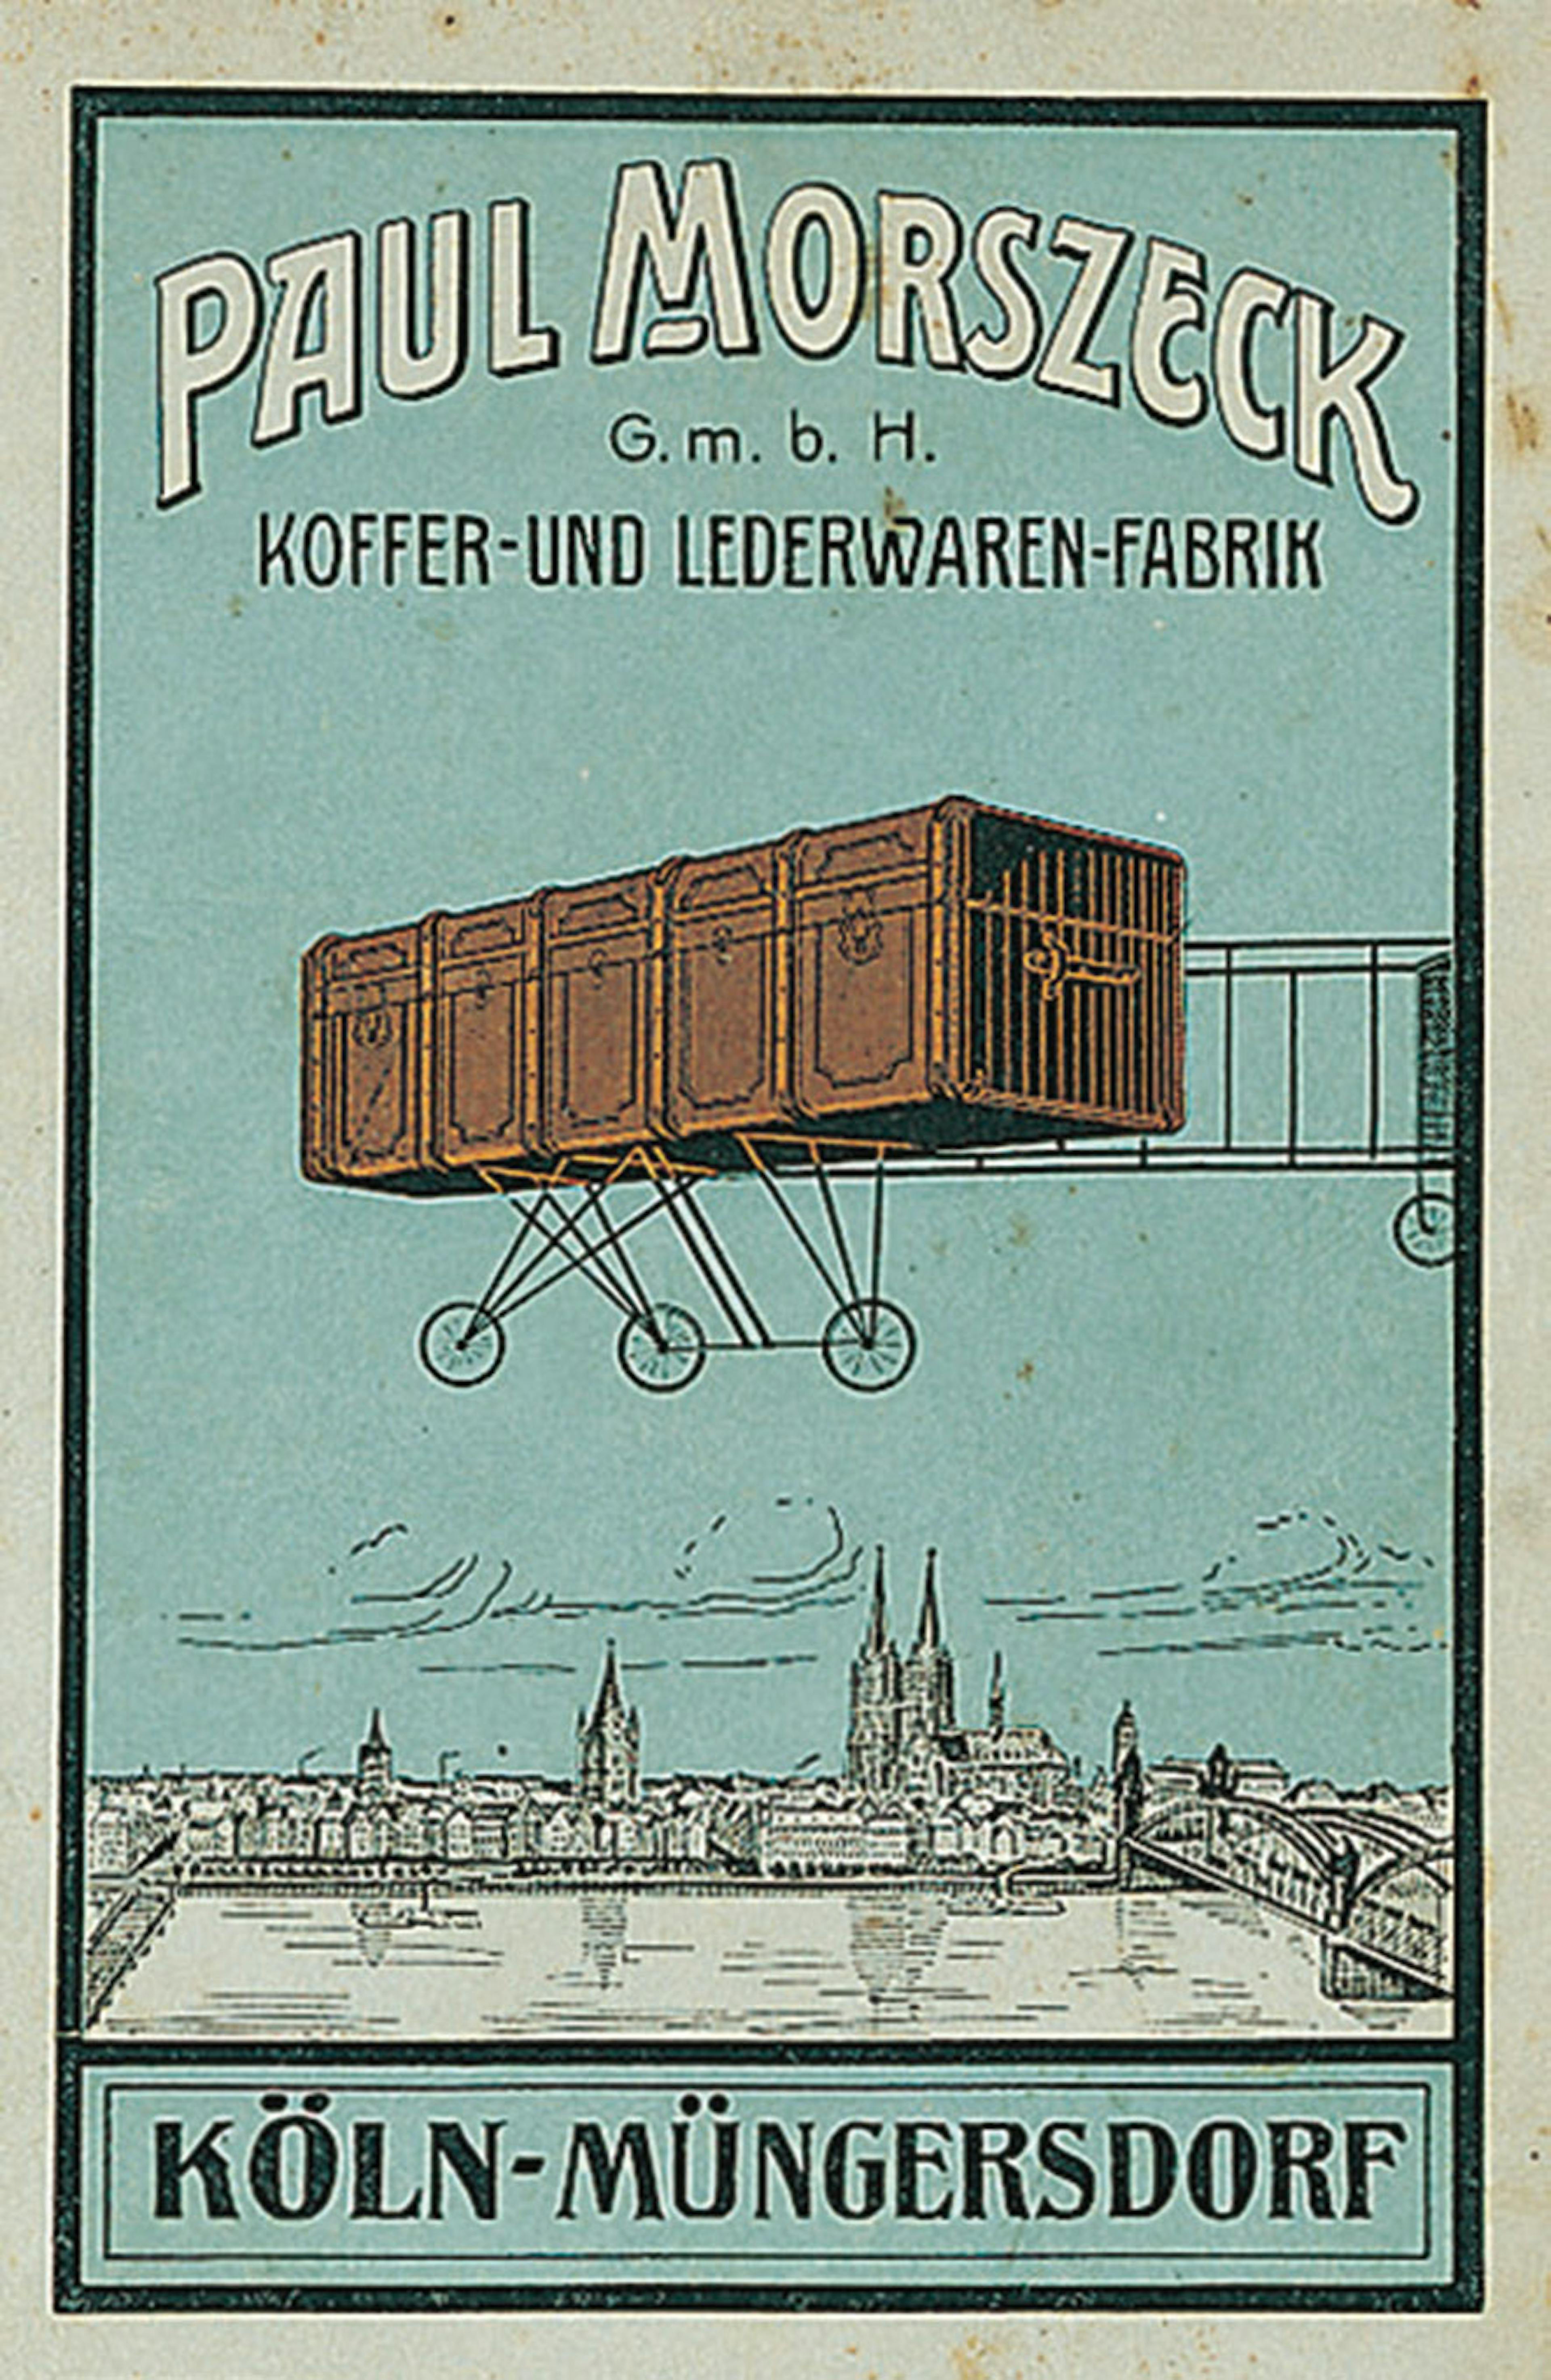 Historic advertisement, beginning of the 20th century © RIMOWA